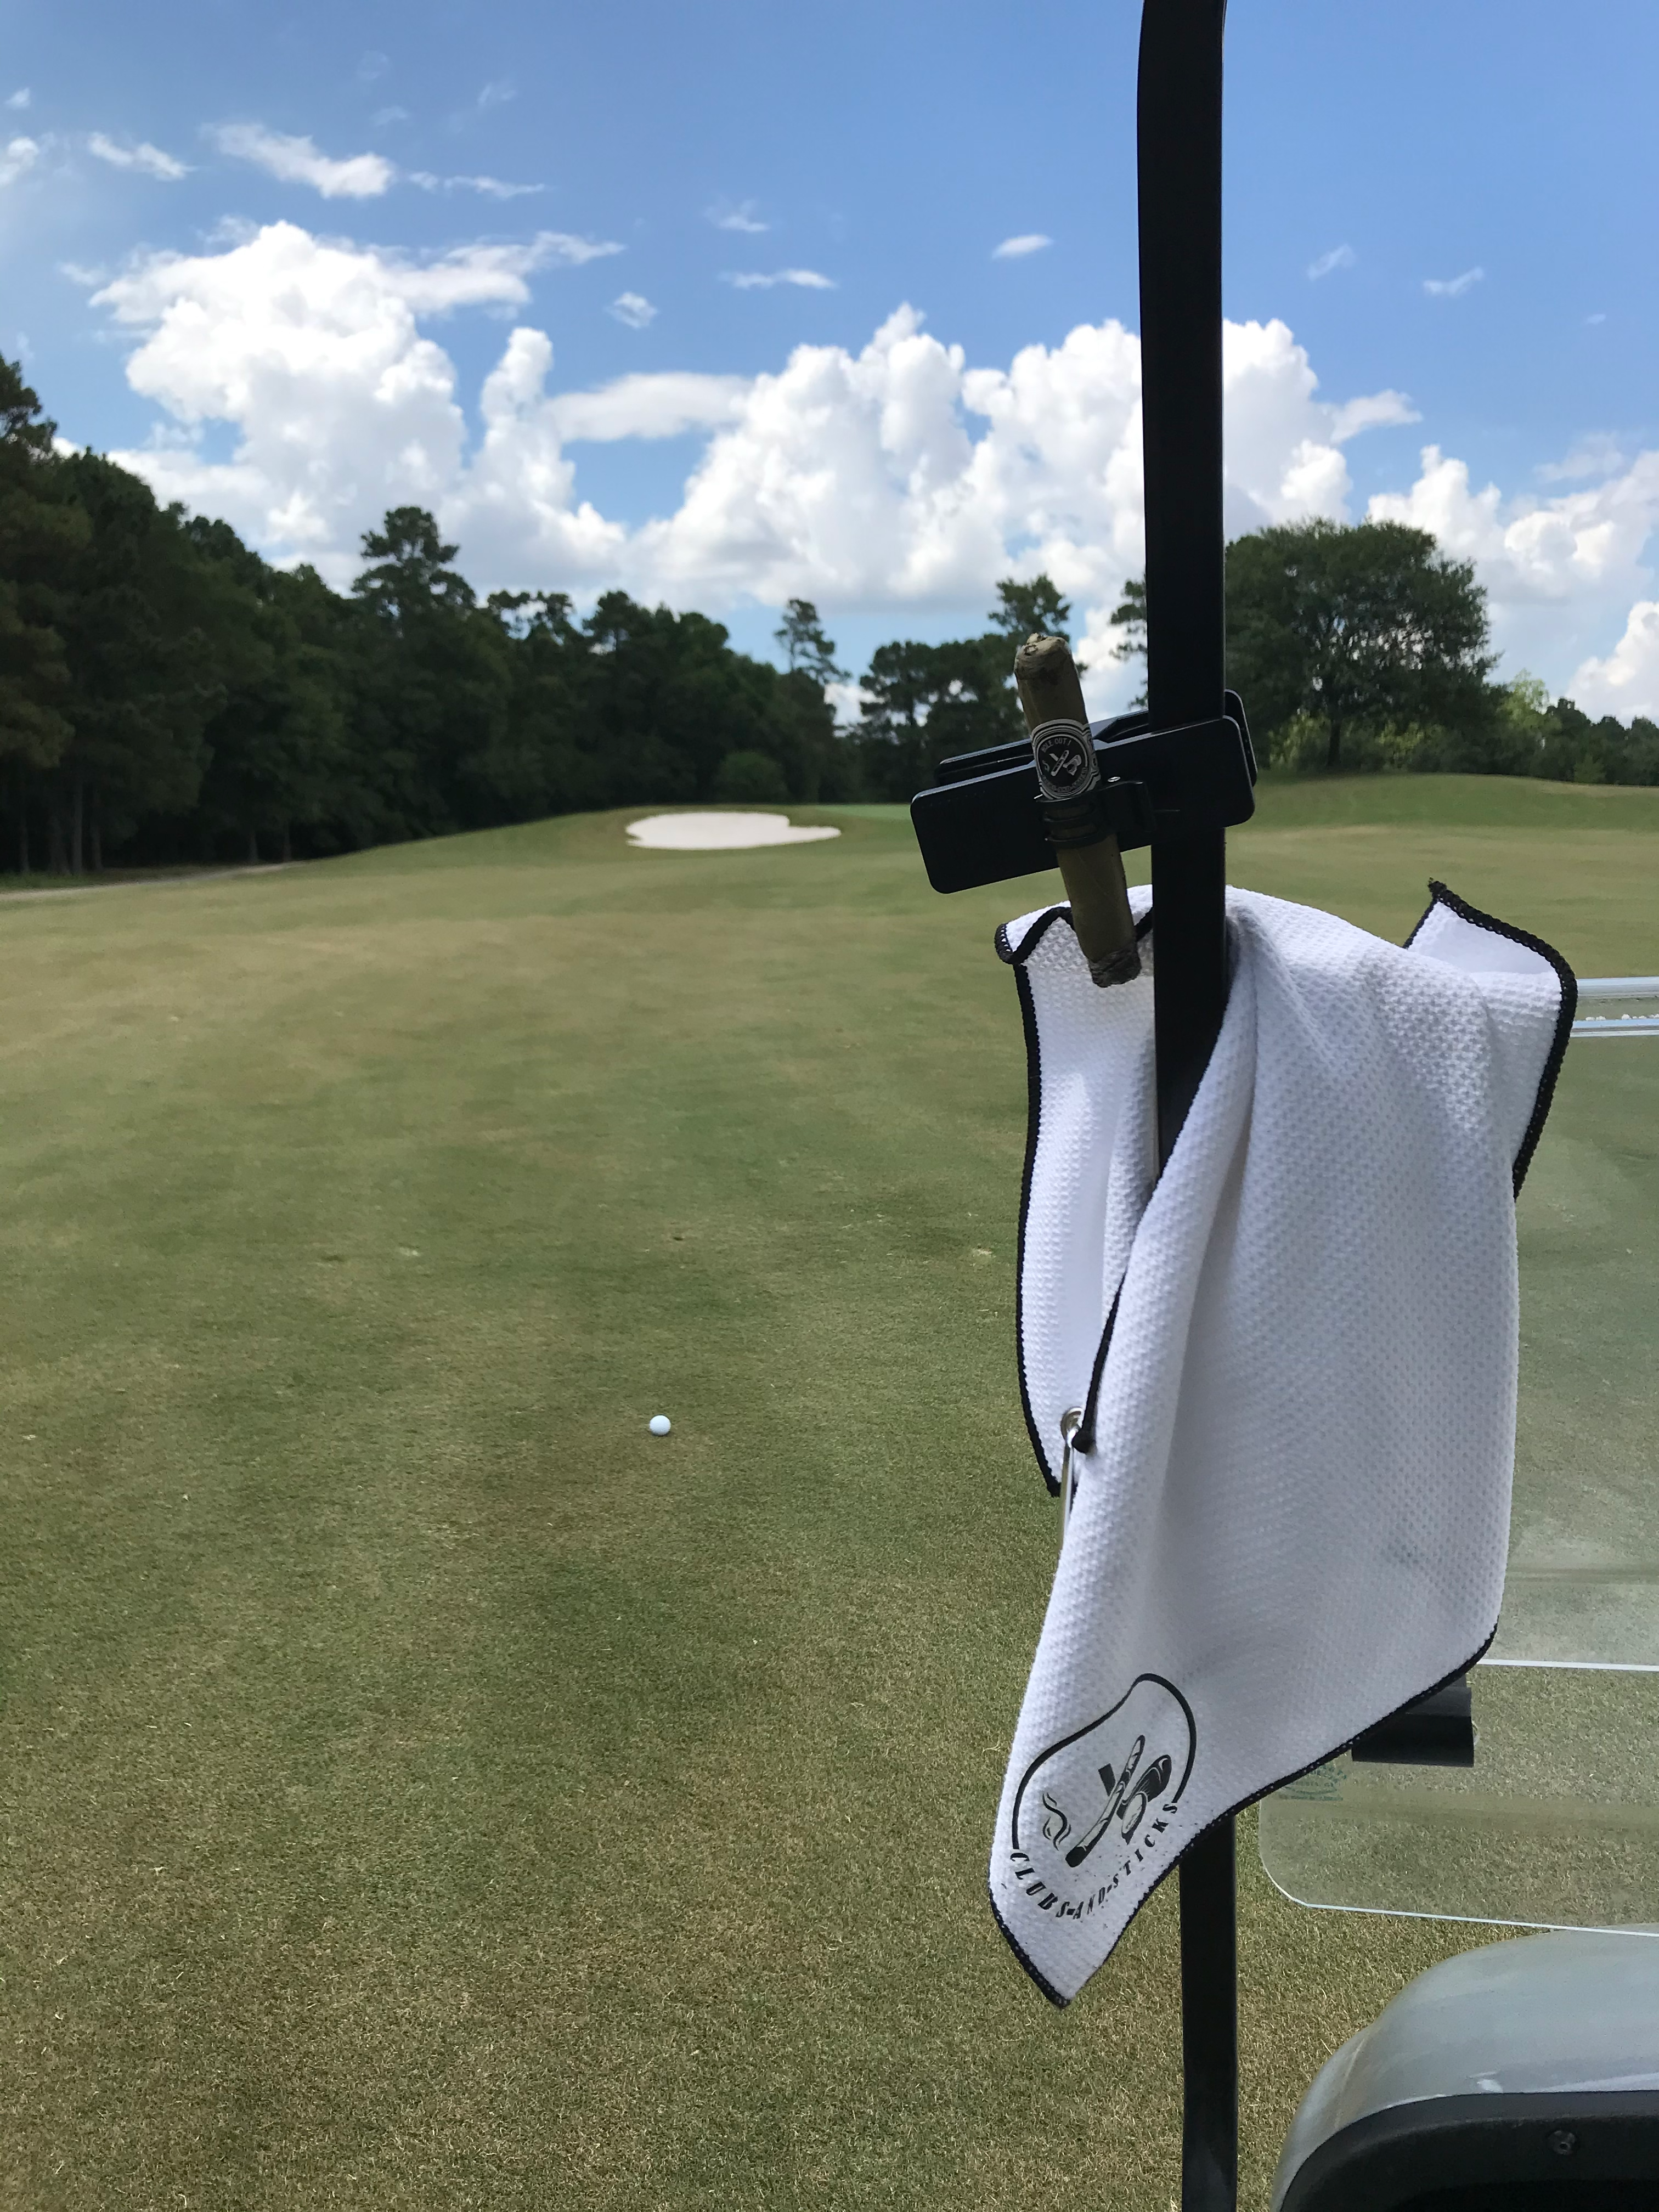 Clubs and Sticks Waffle Golf Towel